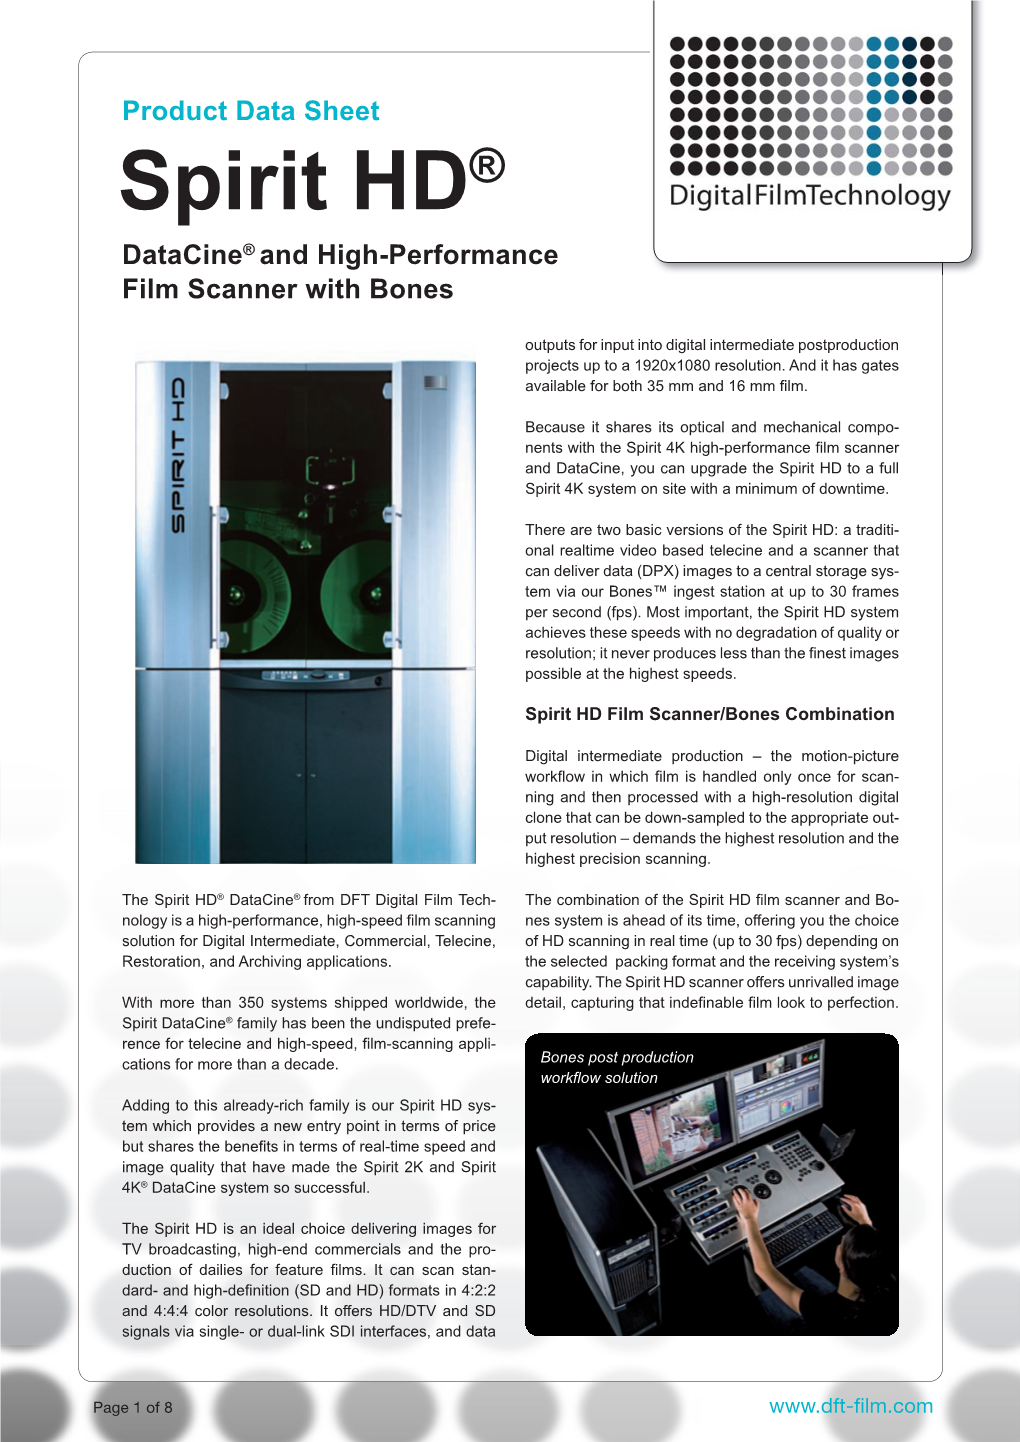 Product Data Sheet Spirit HD® Datacine® and High-Performance Film Scanner with Bones